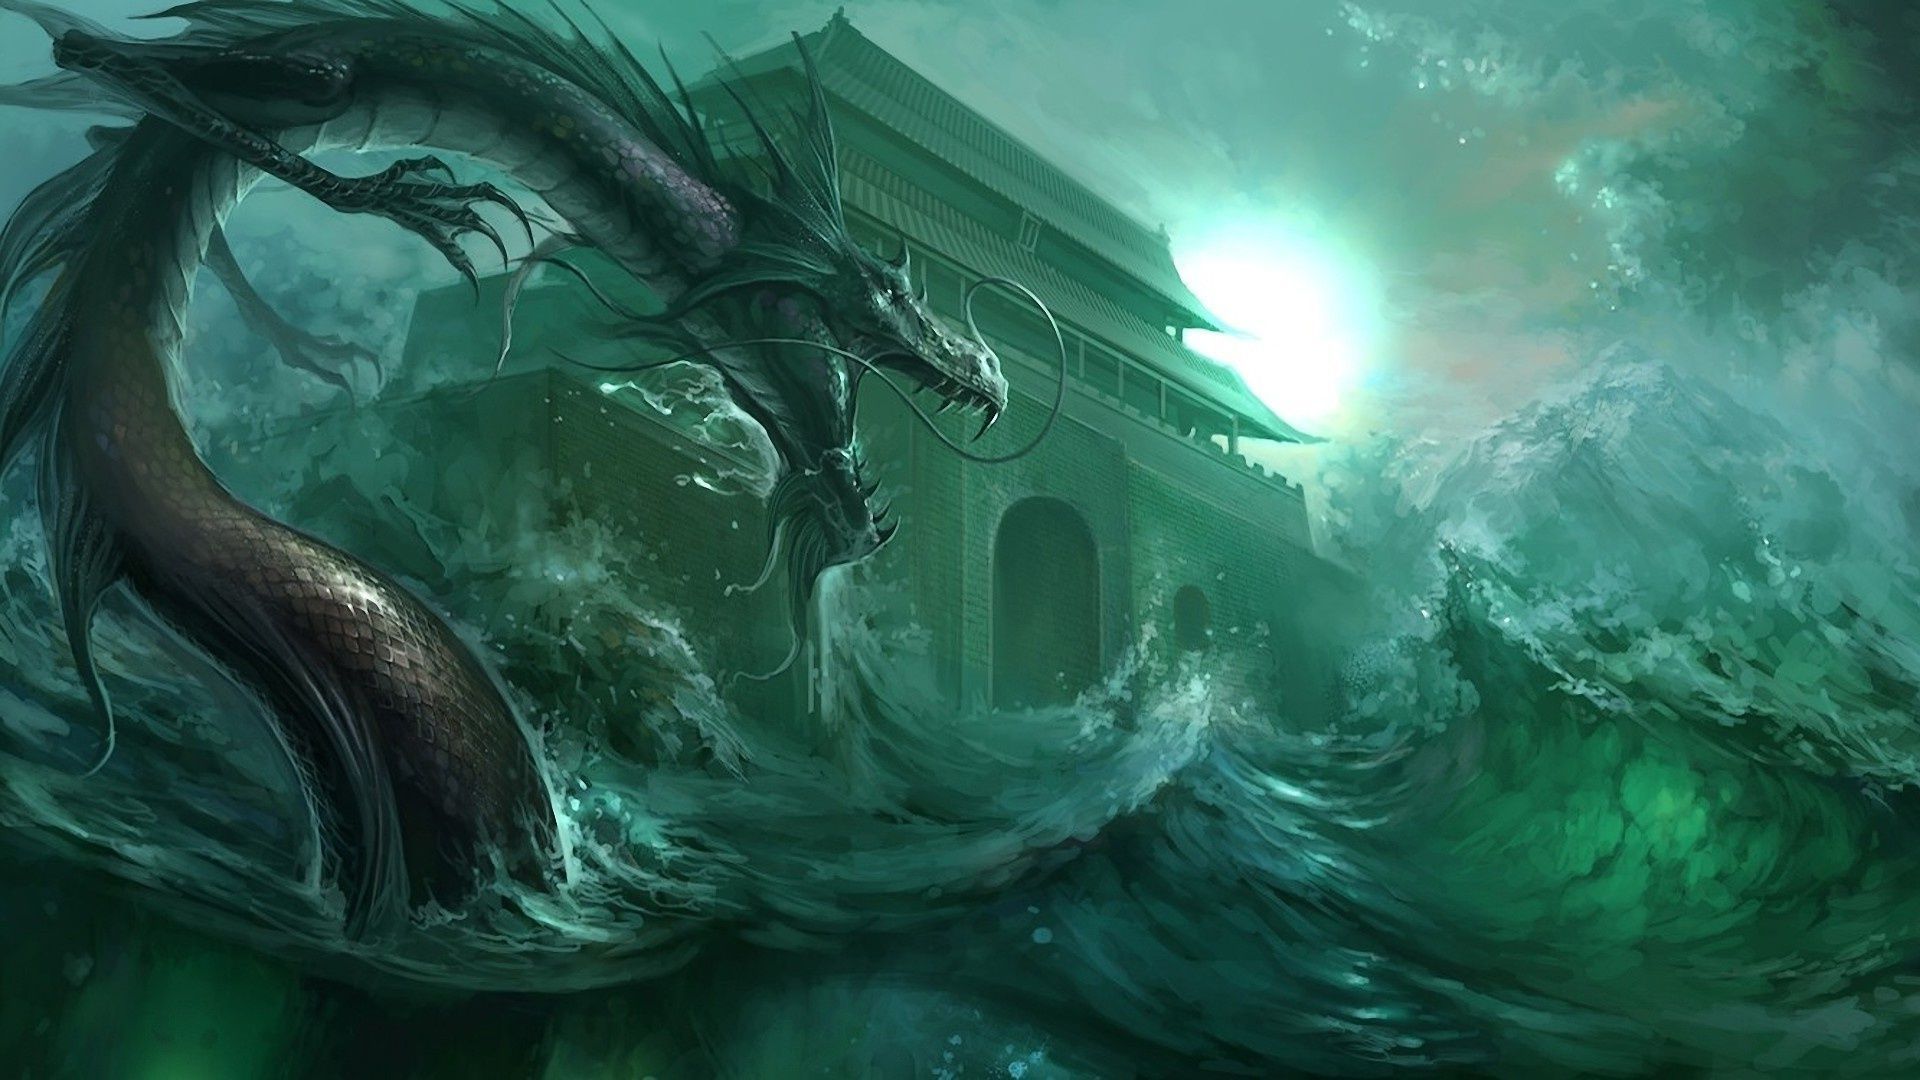 Water Dragon #6